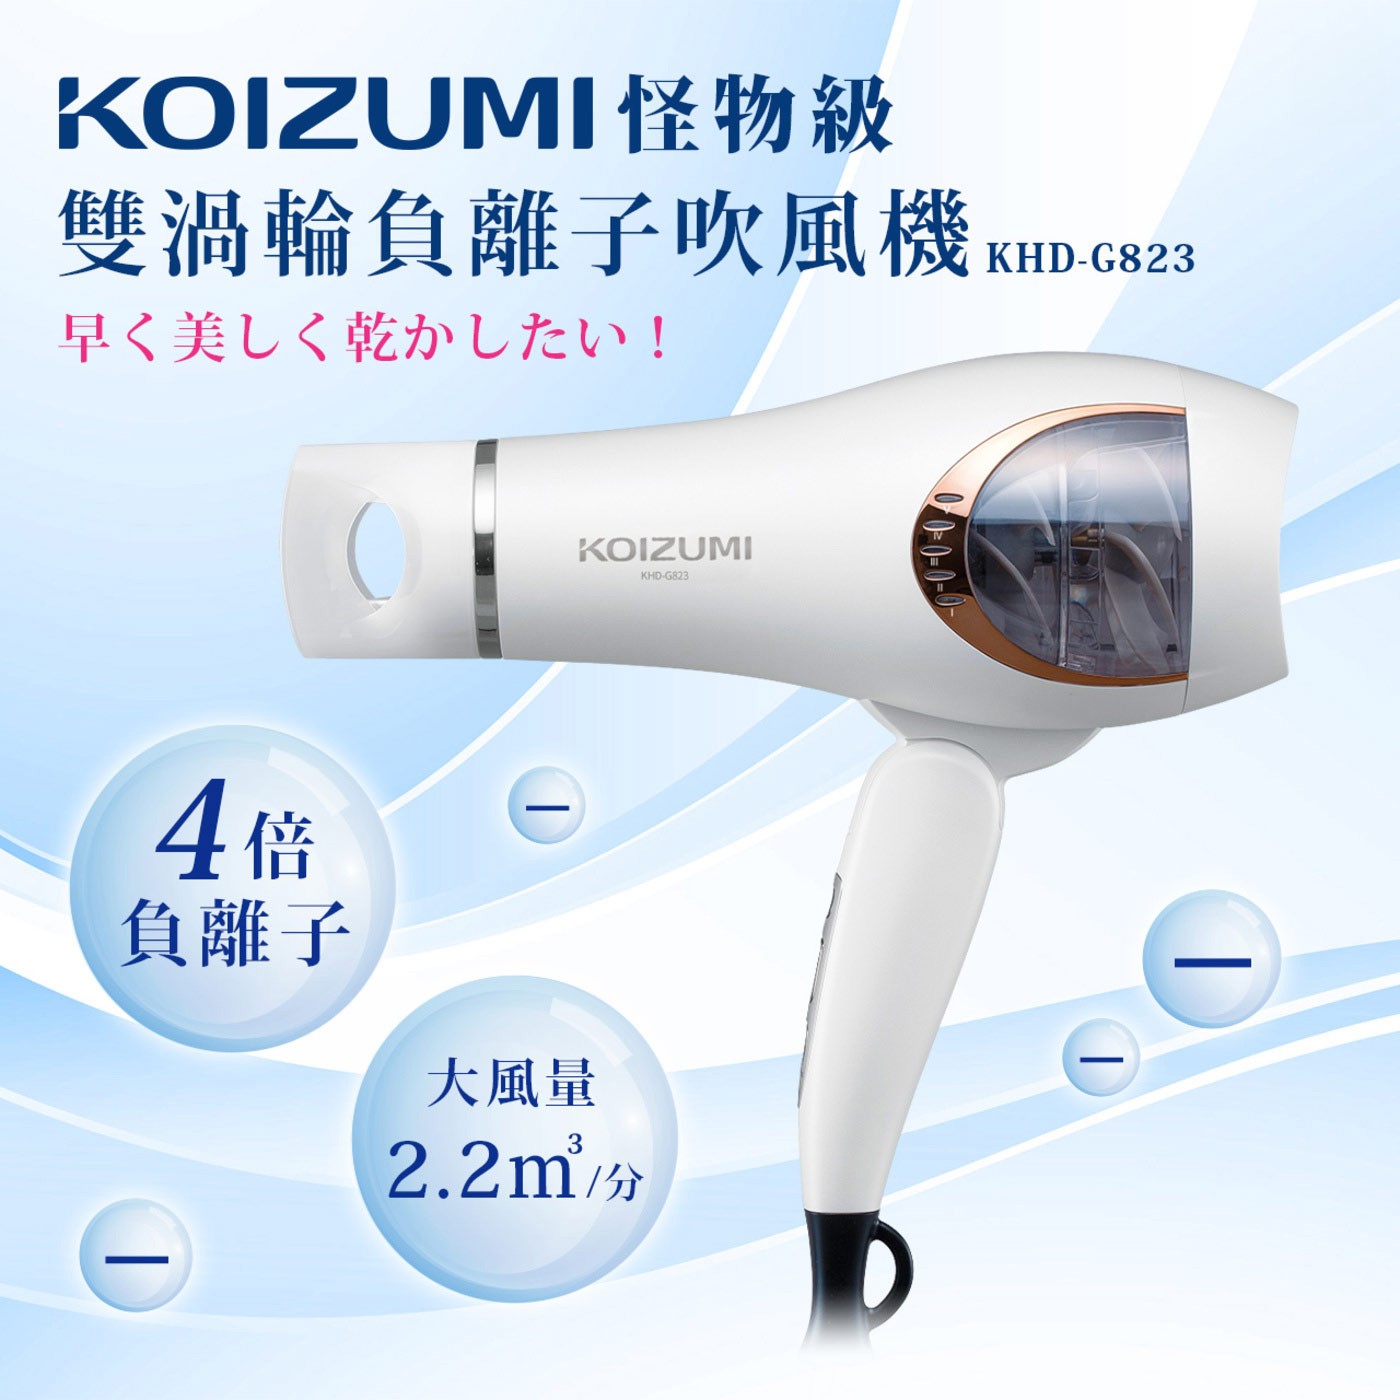 KOIZUMI 怪物級雙渦輪負離子吹風機 KHD-G823-WE，雙渦輪風扇設計，大幅縮短乾髮時間，4倍護髮負離子，瞬間撫平毛躁感，5檔風速、2檔溫度、3種模式自由切換，電子按鈕設計，更輕鬆省力。